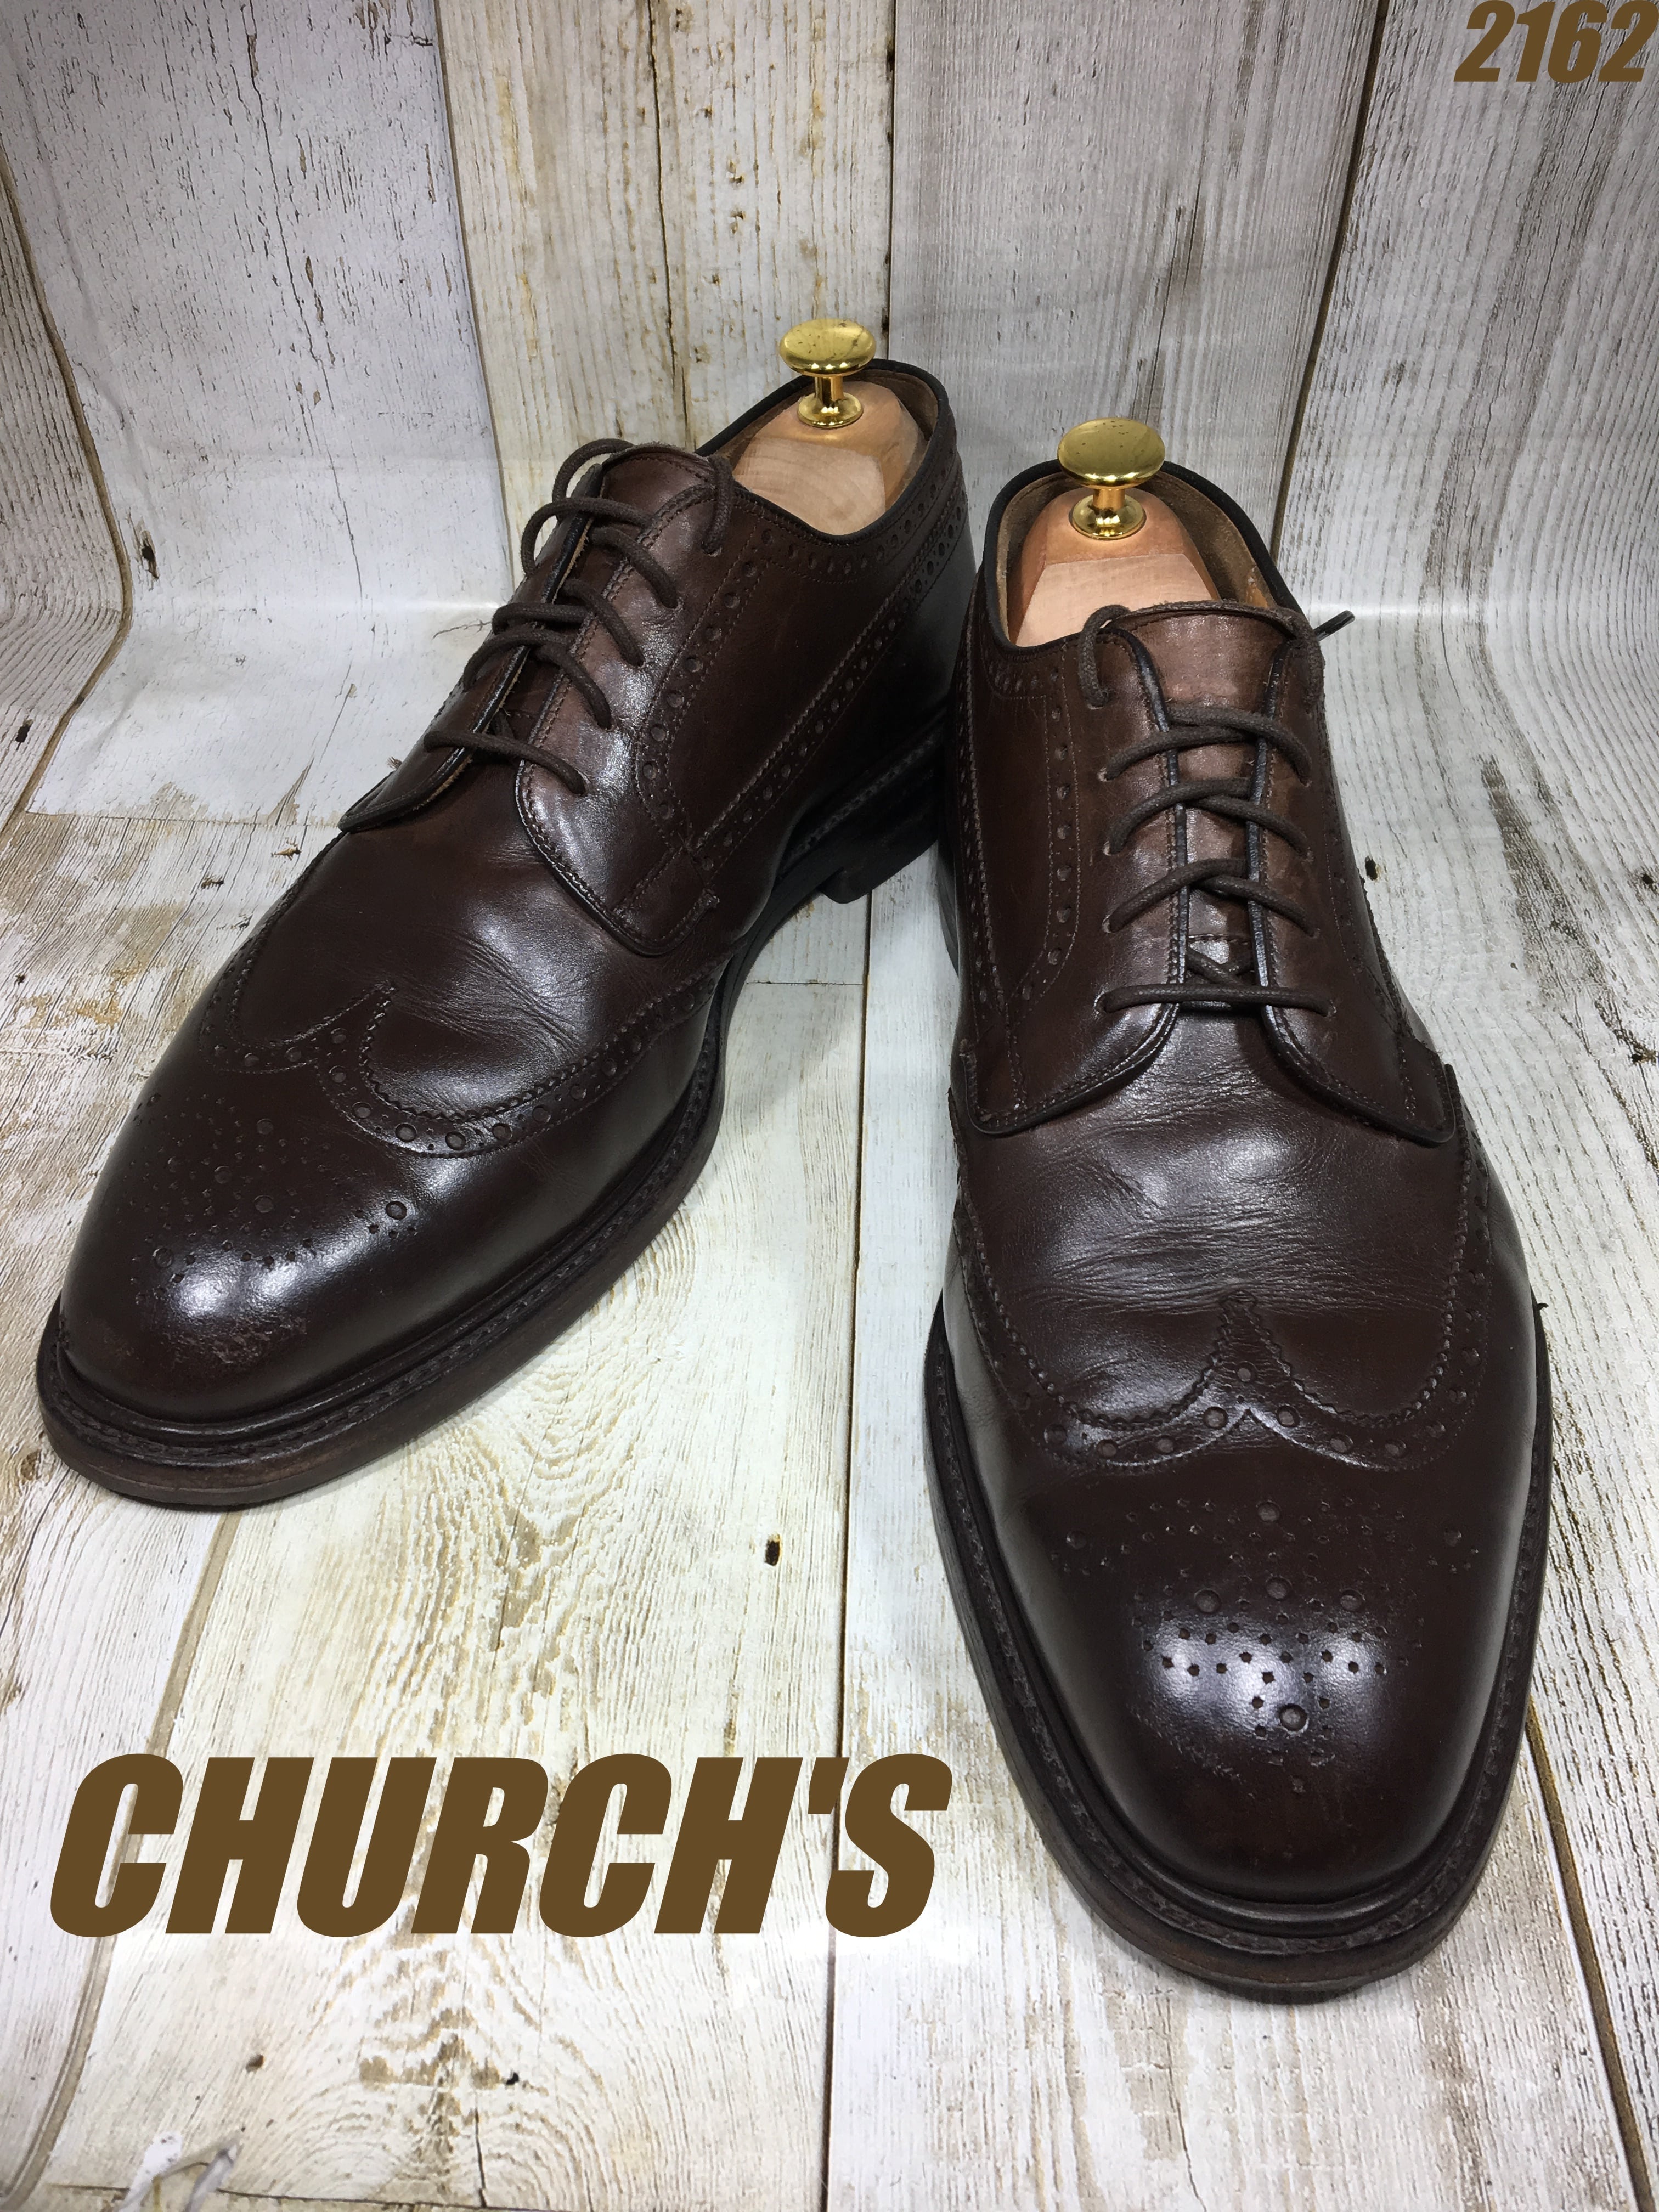 Church's チャーチ フルブローグ グラフトン UK9H 28cm | 中古靴・革靴・ブーツ通販専門店 DafsMart ダフスマート  Online Shop powered by BASE